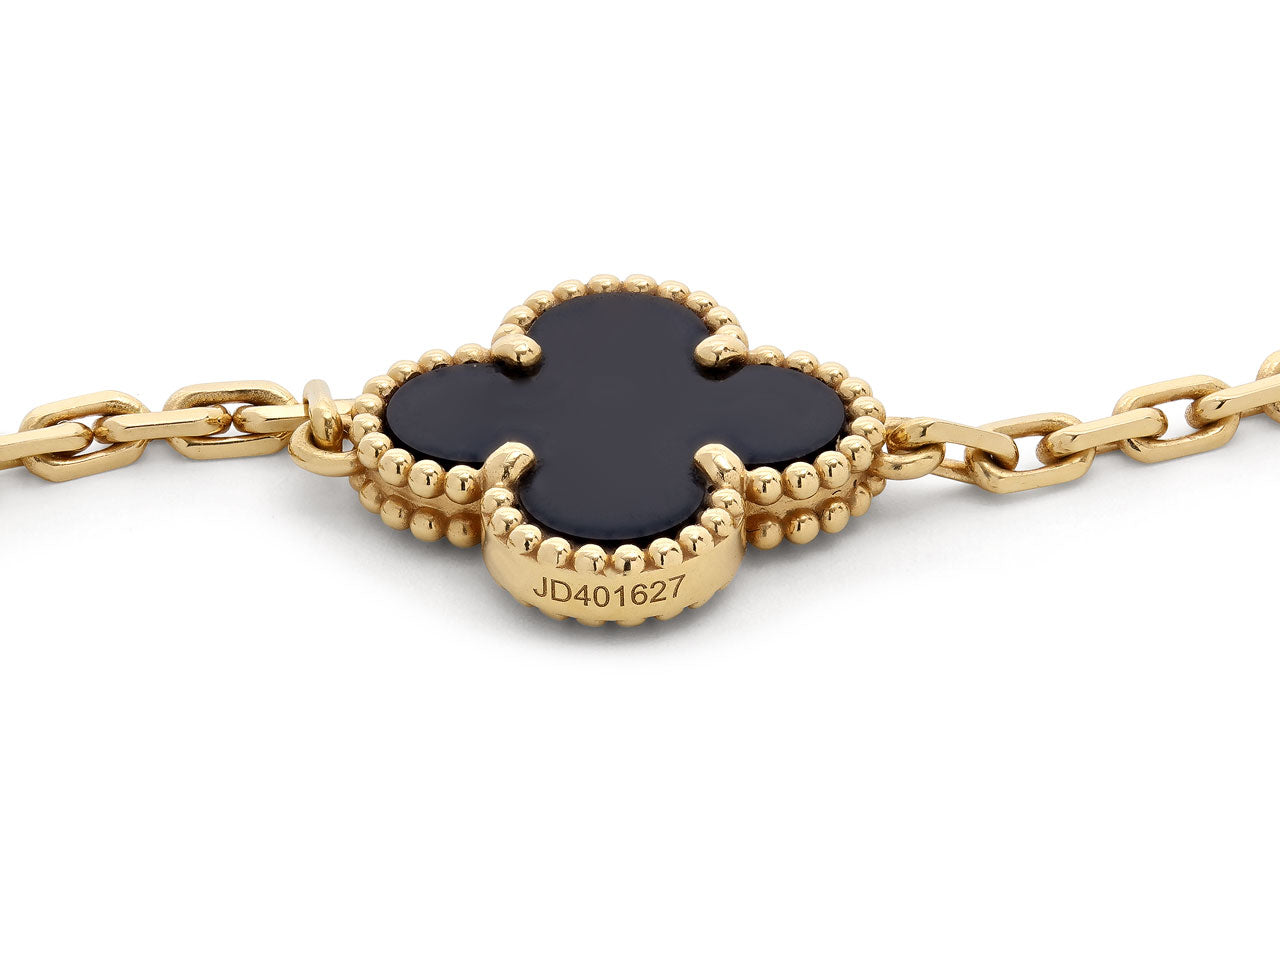 Van Cleef & Arpels 'Vintage Alhambra' 10 Motif Onyx Necklace in 18K Gold